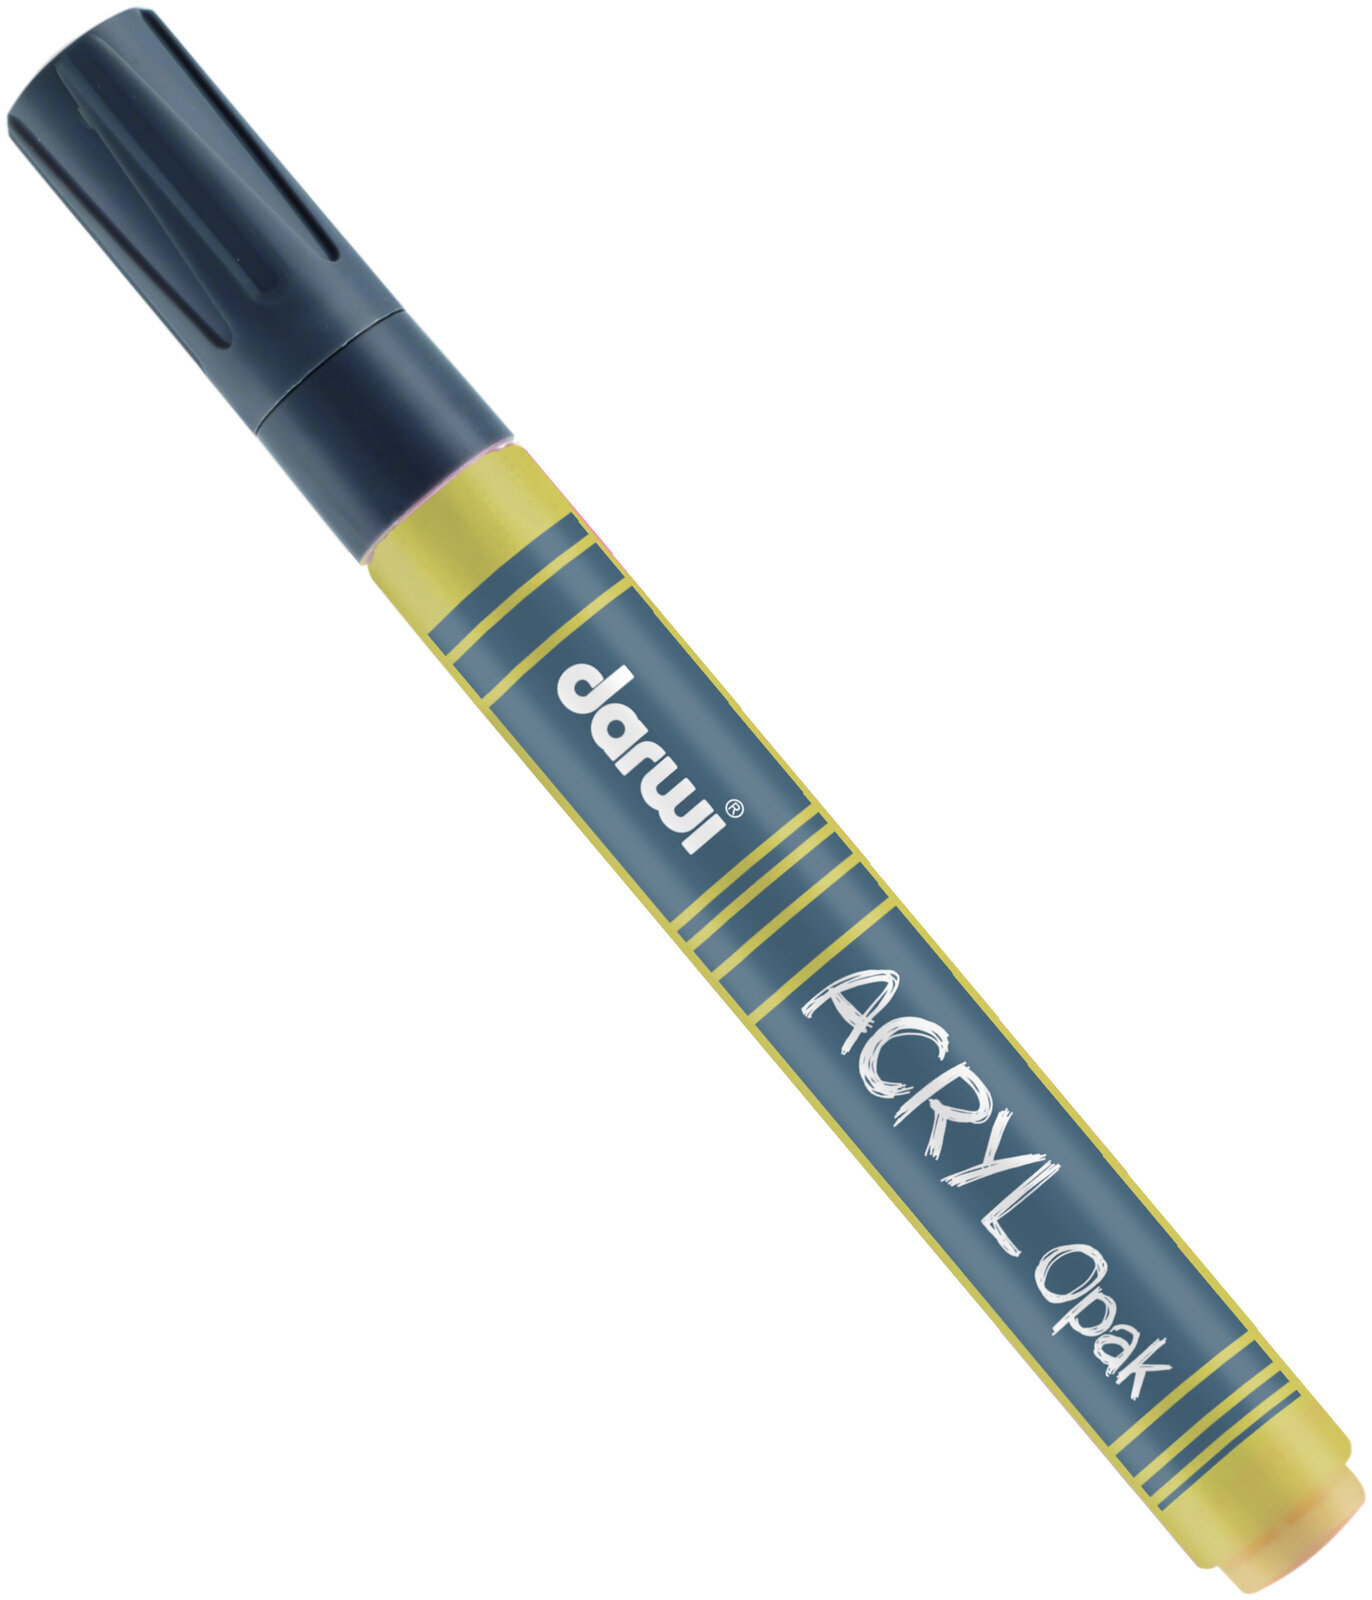 Felt-Tip Pen Darwi Acryl Opak Marker Acryl Marker Gold 6 ml 1 pc